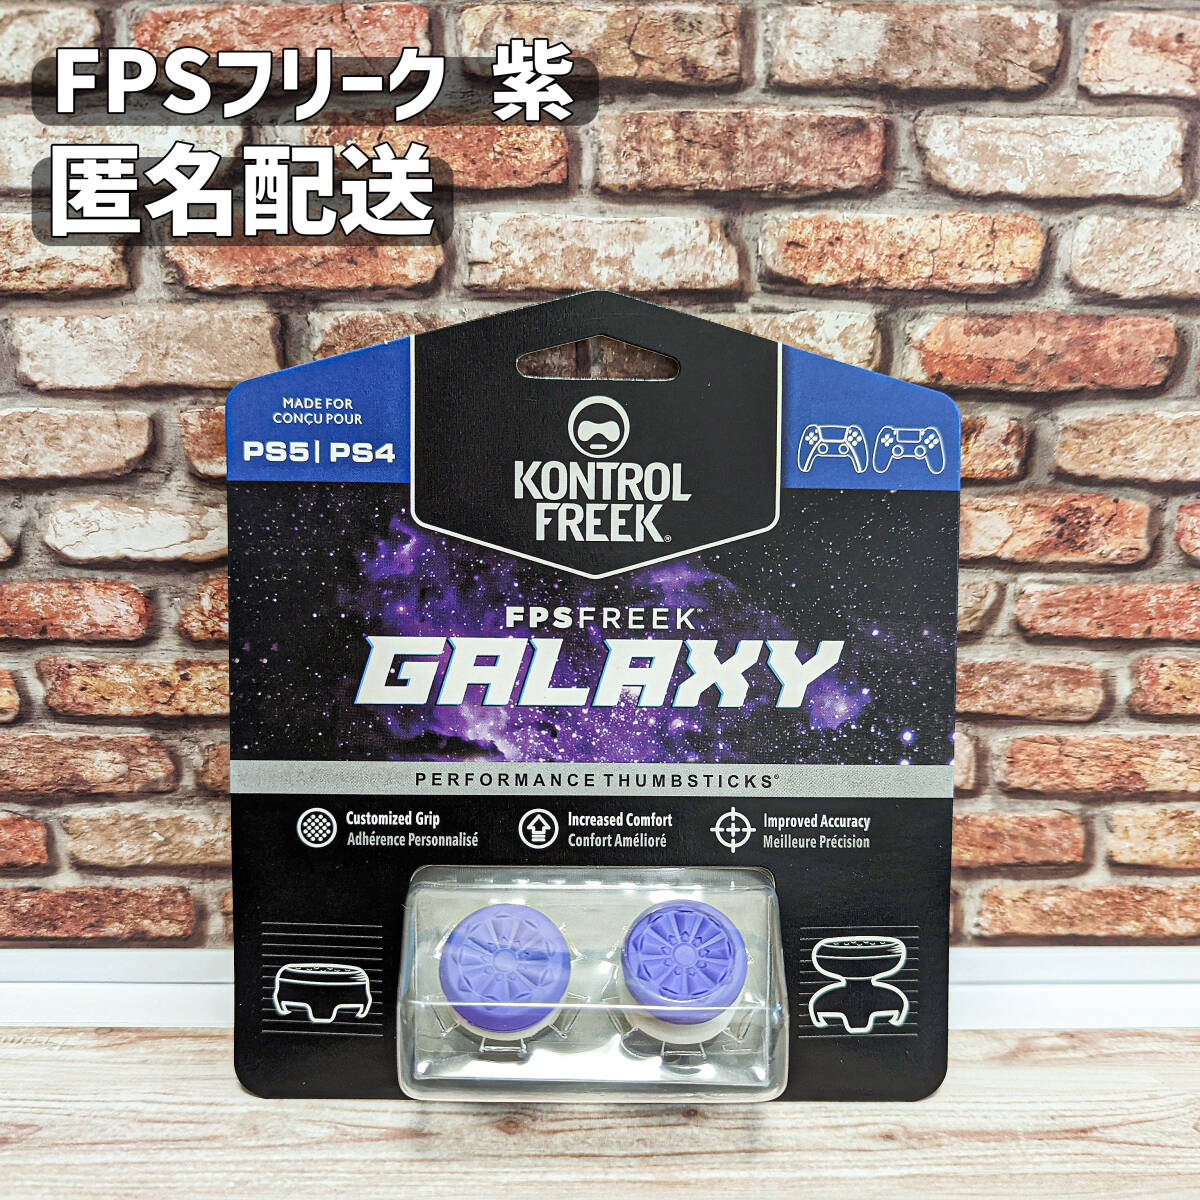 FPS フリーク エイムアシスト 紫 PS4 PS5 エイムキャップ Galaxy 匿名配送 _画像1